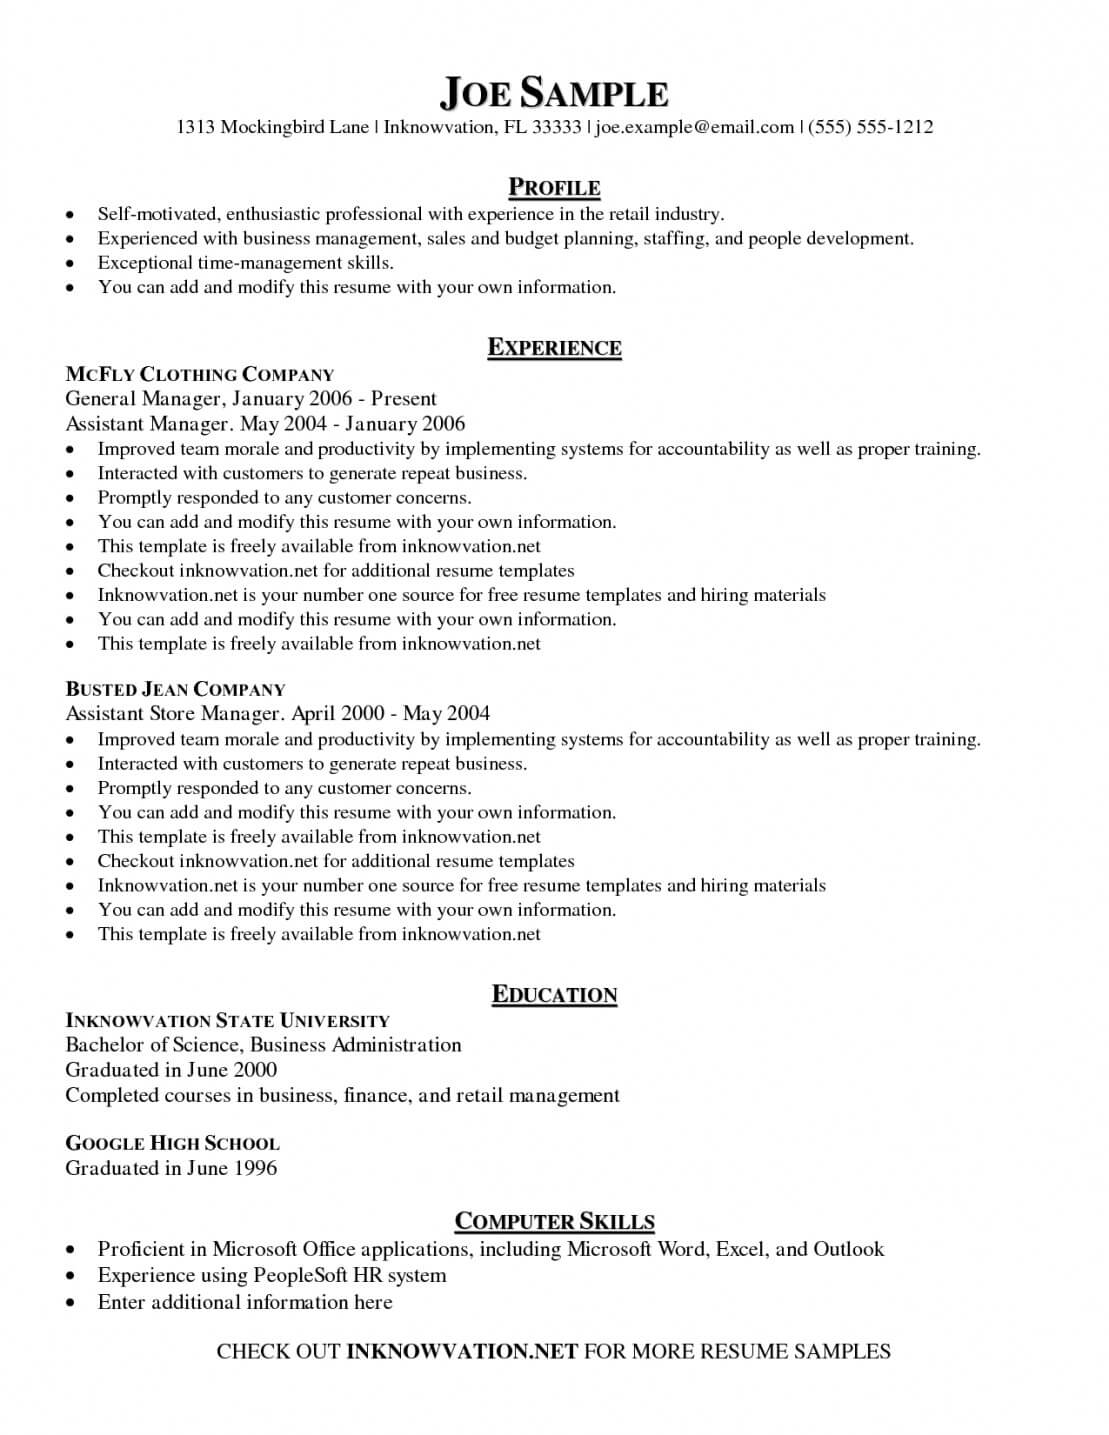 Printable Resume Templates – Resume Template | Resume With Free Printable Resume Templates Microsoft Word